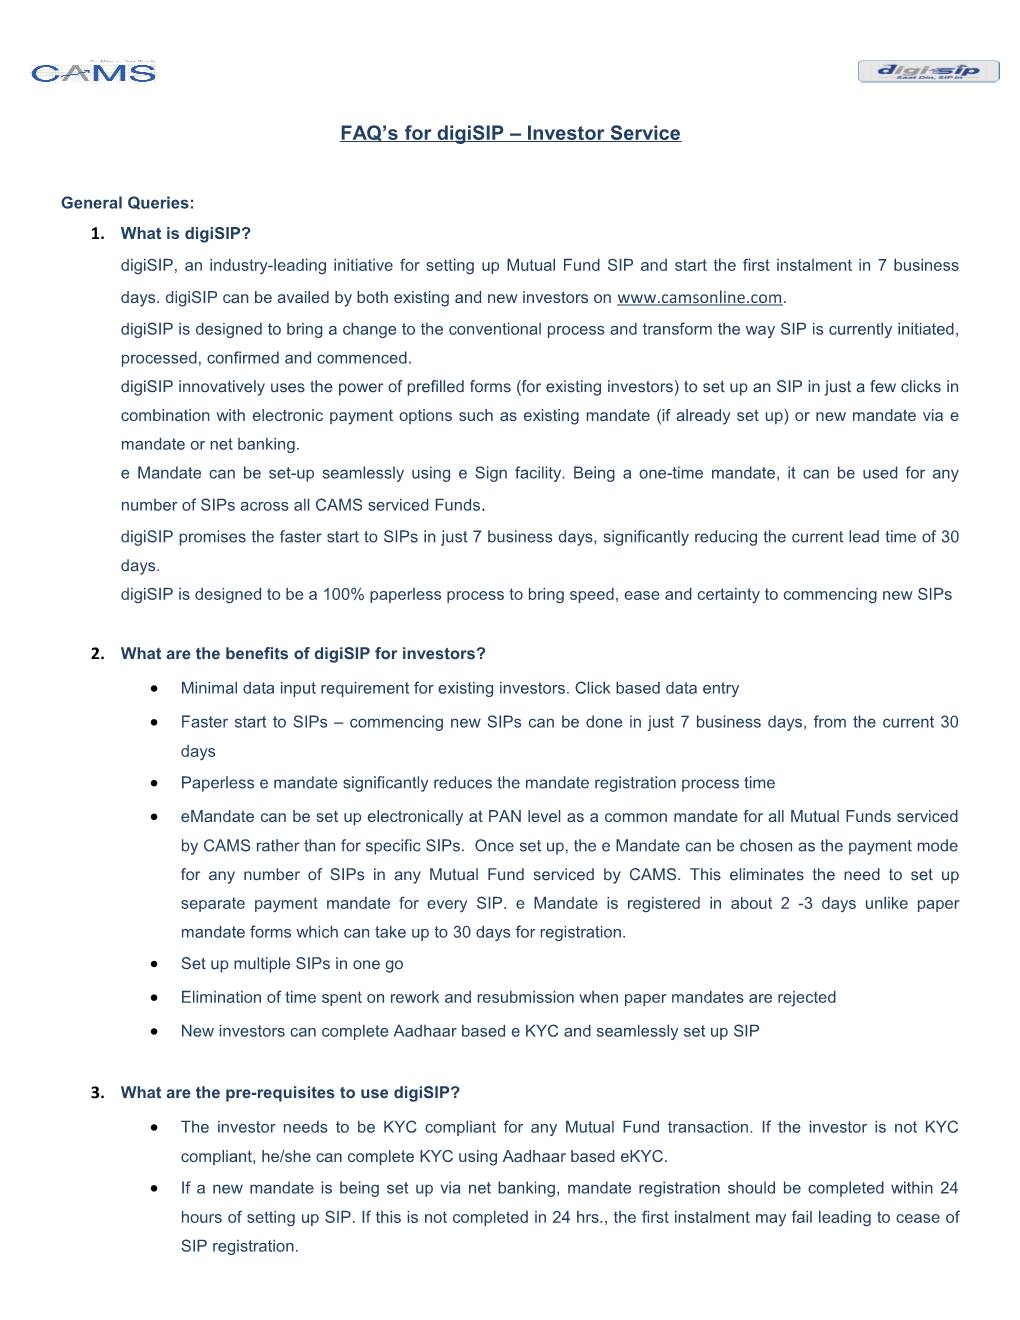 FAQ S for Digisip Investor Service